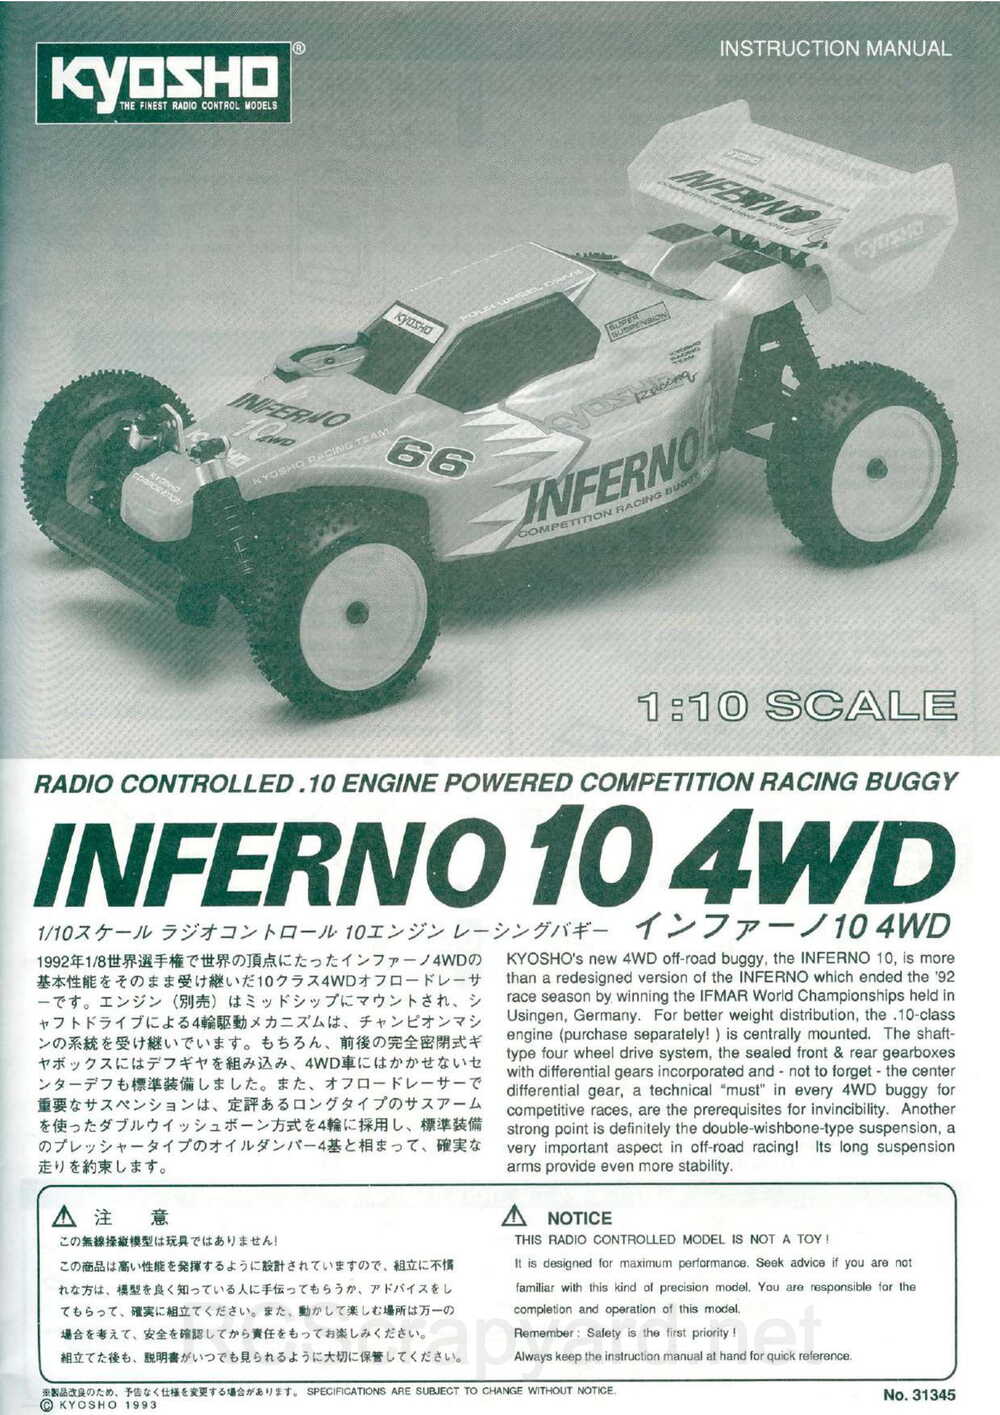 Kyosho - 31345 - Inferno 10 - Manual - Page 01